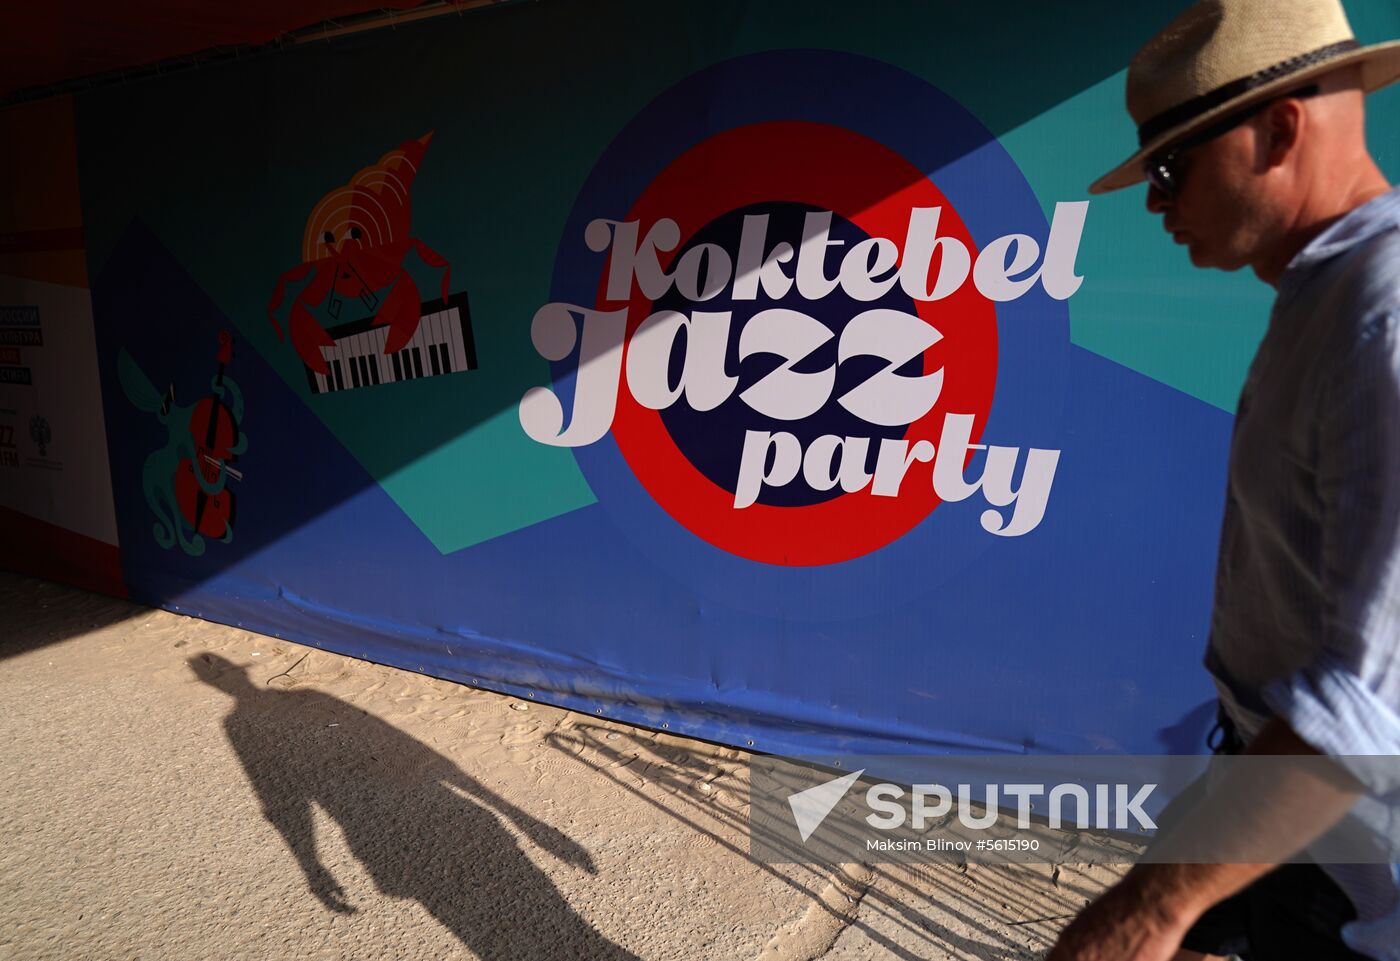 Preparations for Koktebel Jazz Party festival